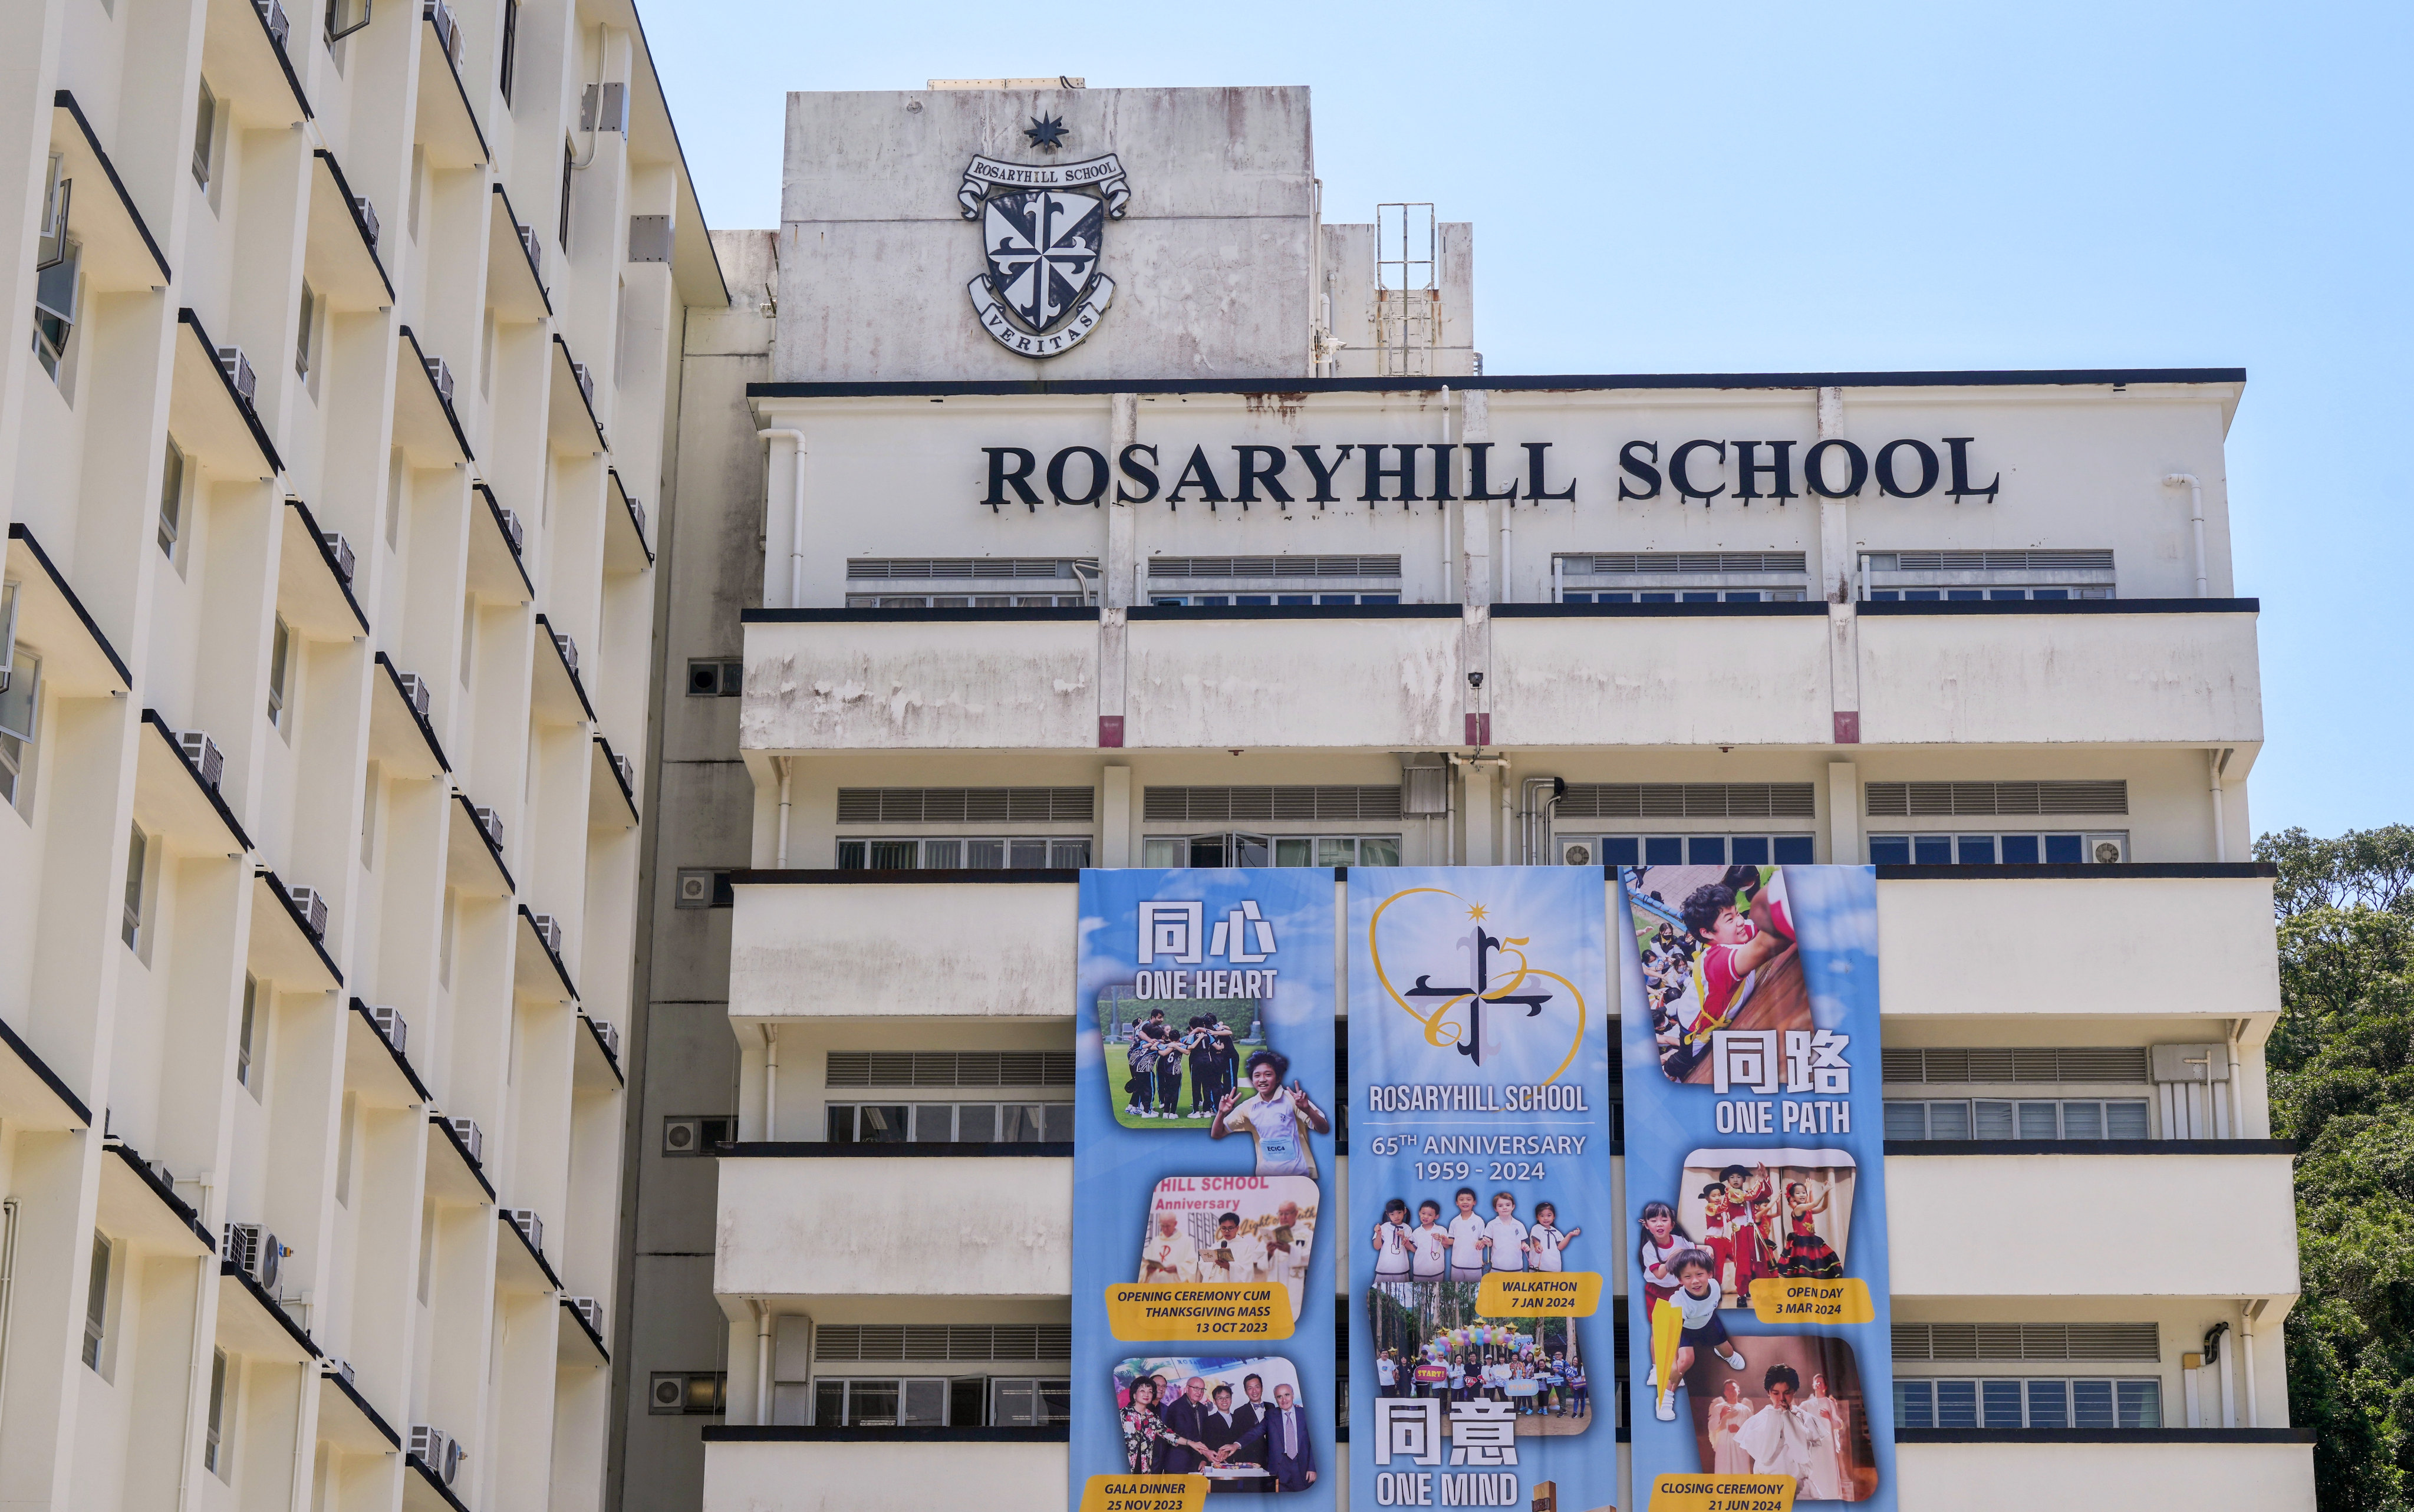 Hong Kong lawmaker takes aim at Education Bureau over soon-to-close Rosaryhill Secondary School. Photo: Elson Li